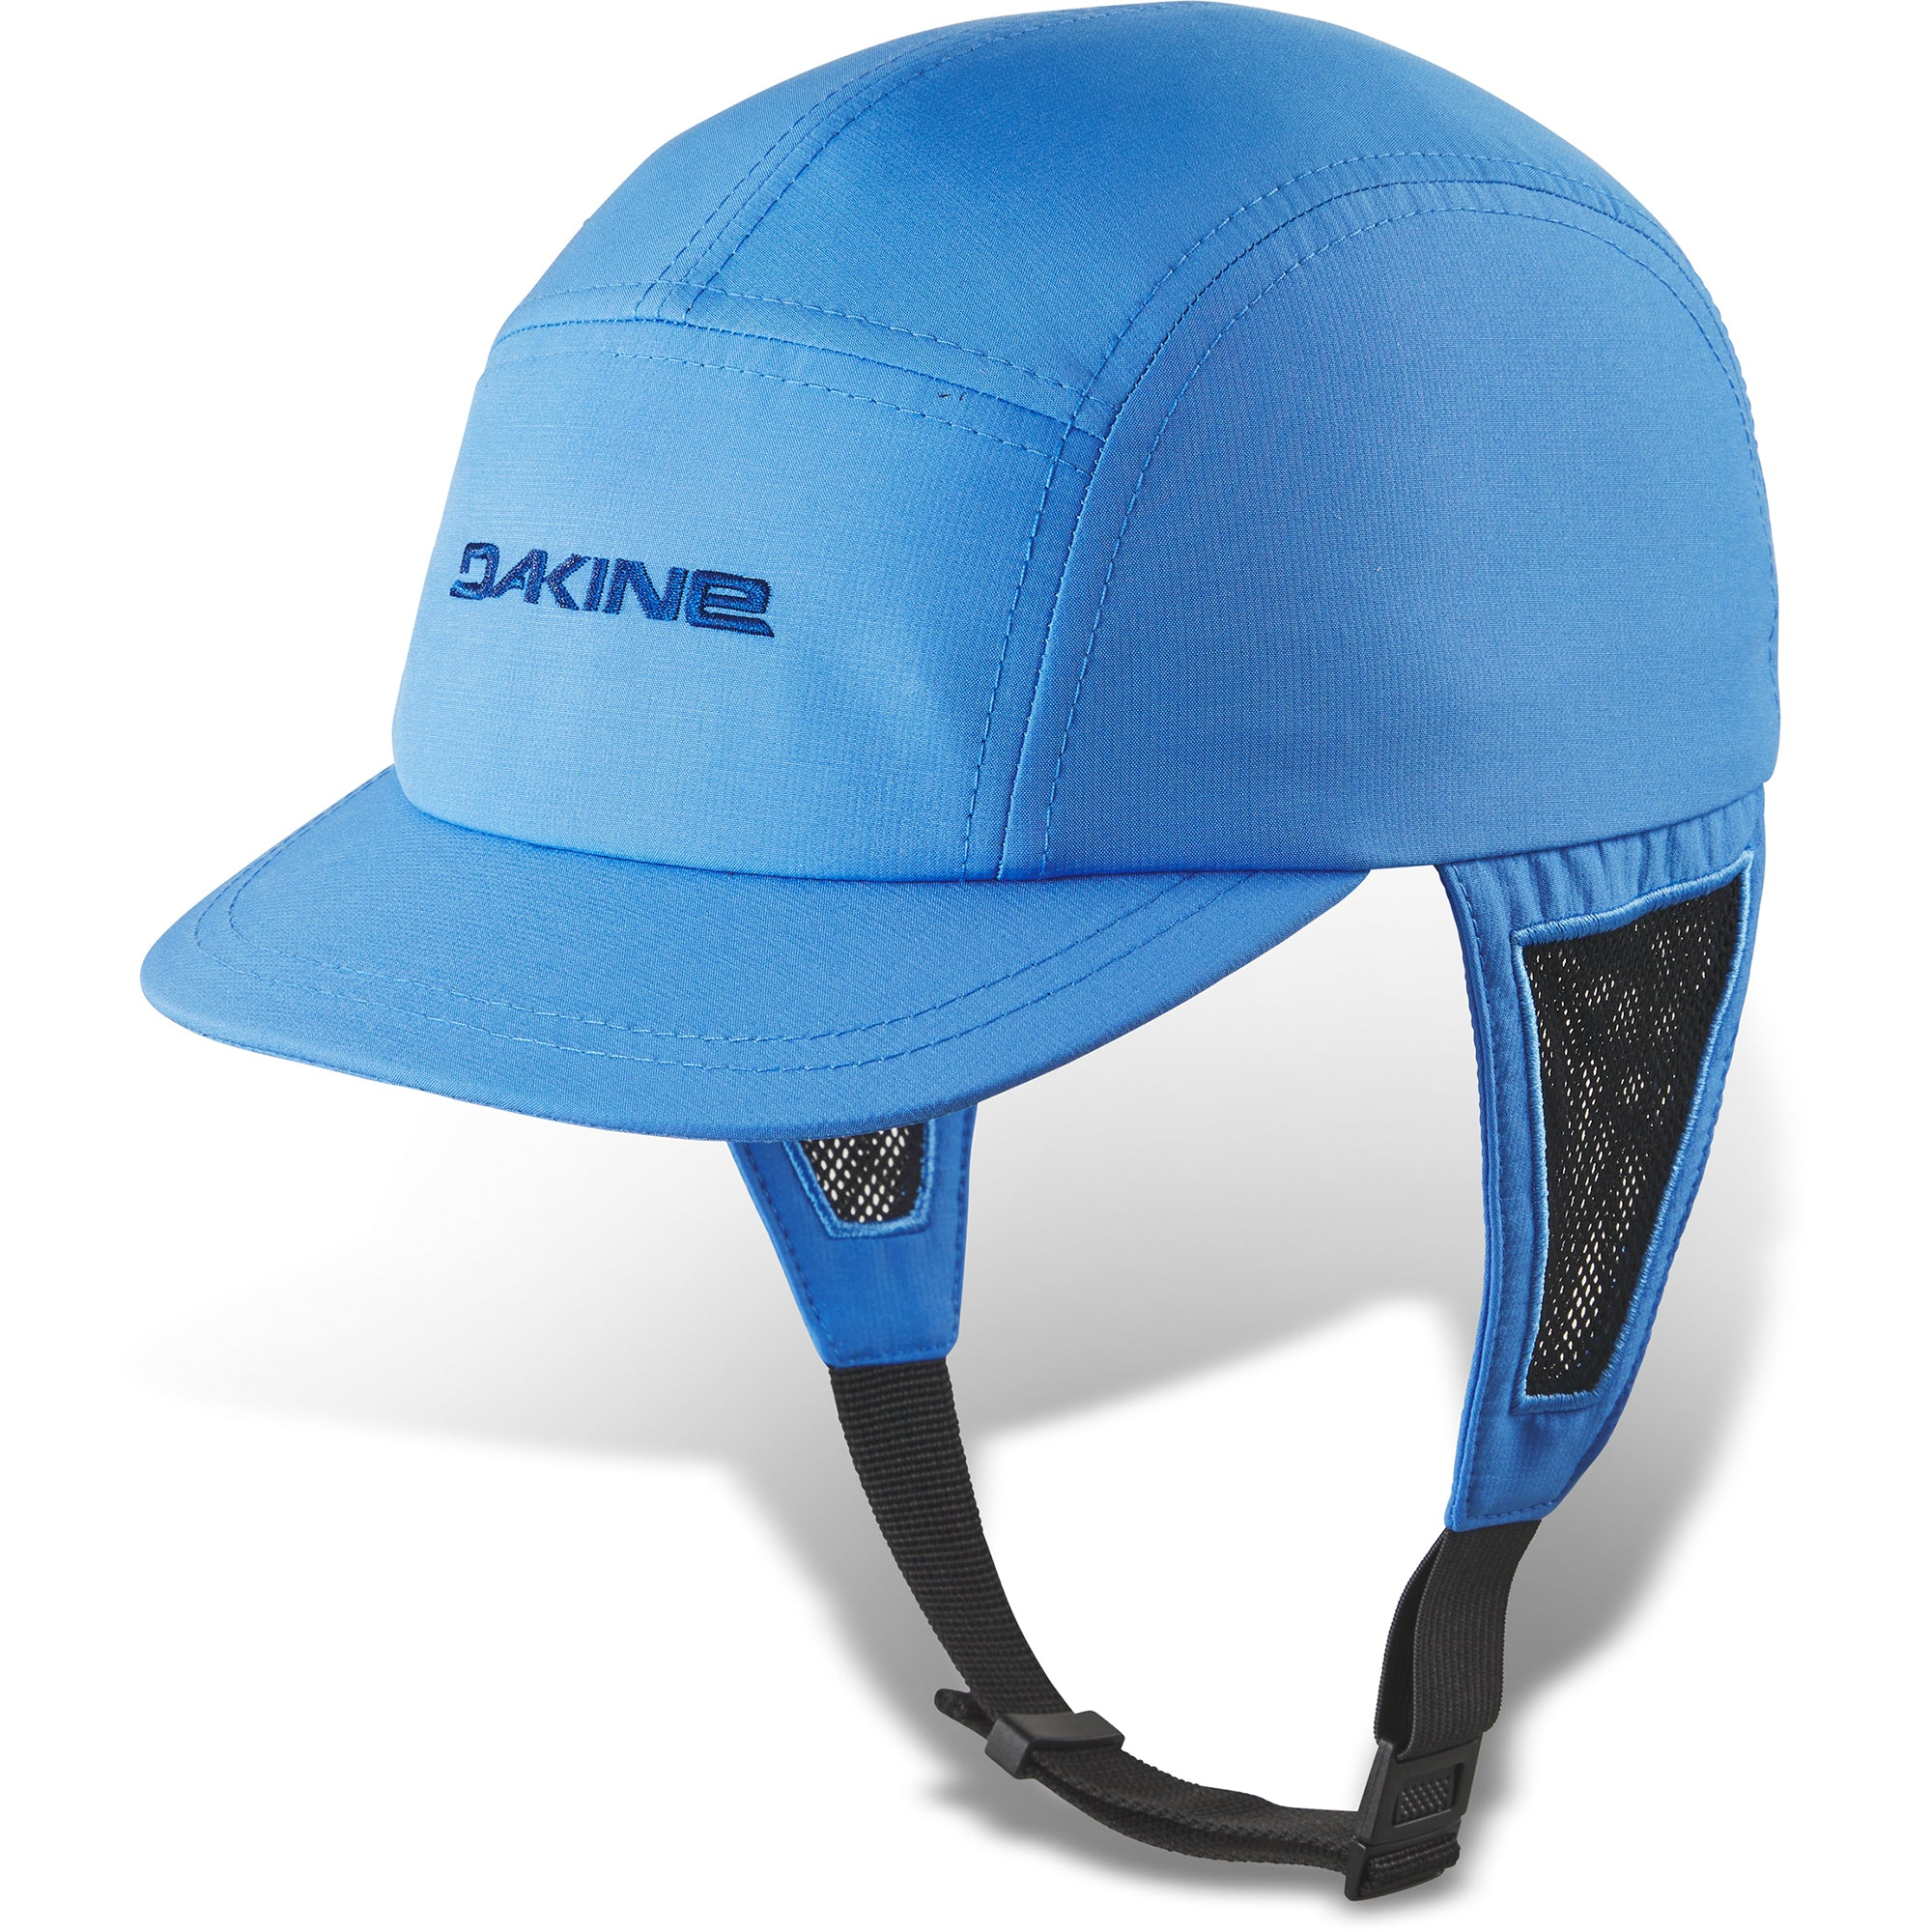 SURF CAP DAKINE (deep blue)